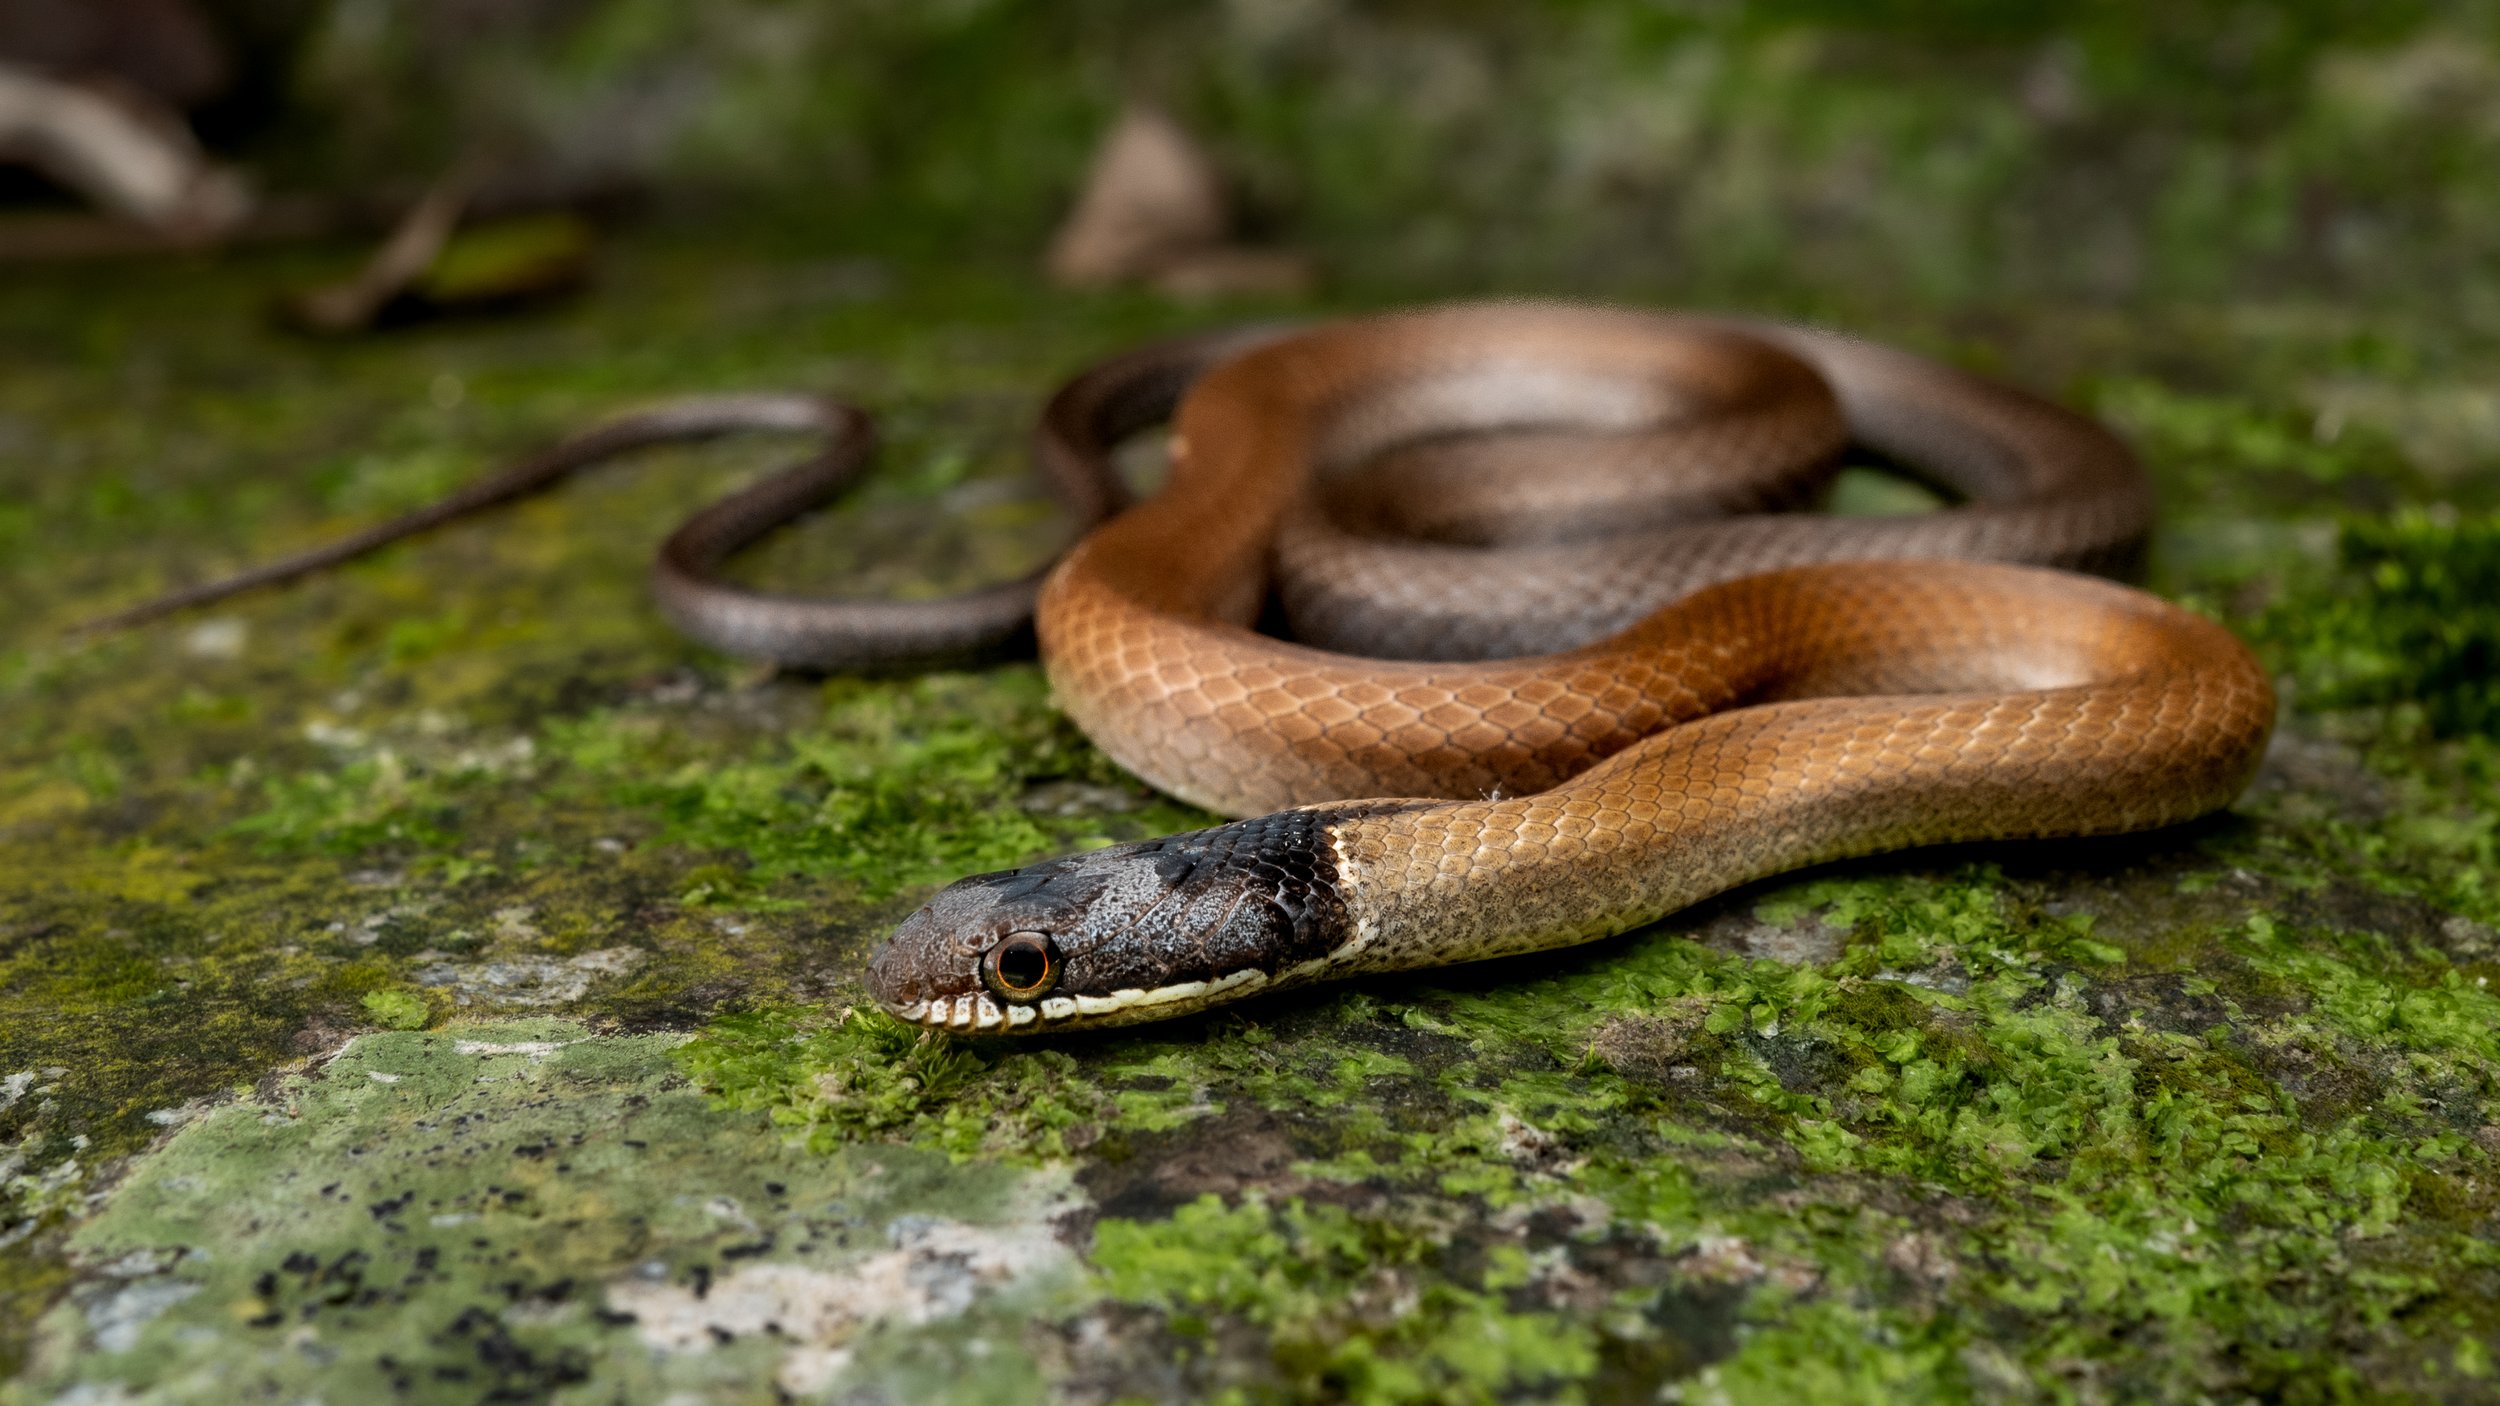 Chinese Mountain Snake - Sibynophis chinensis chinensis